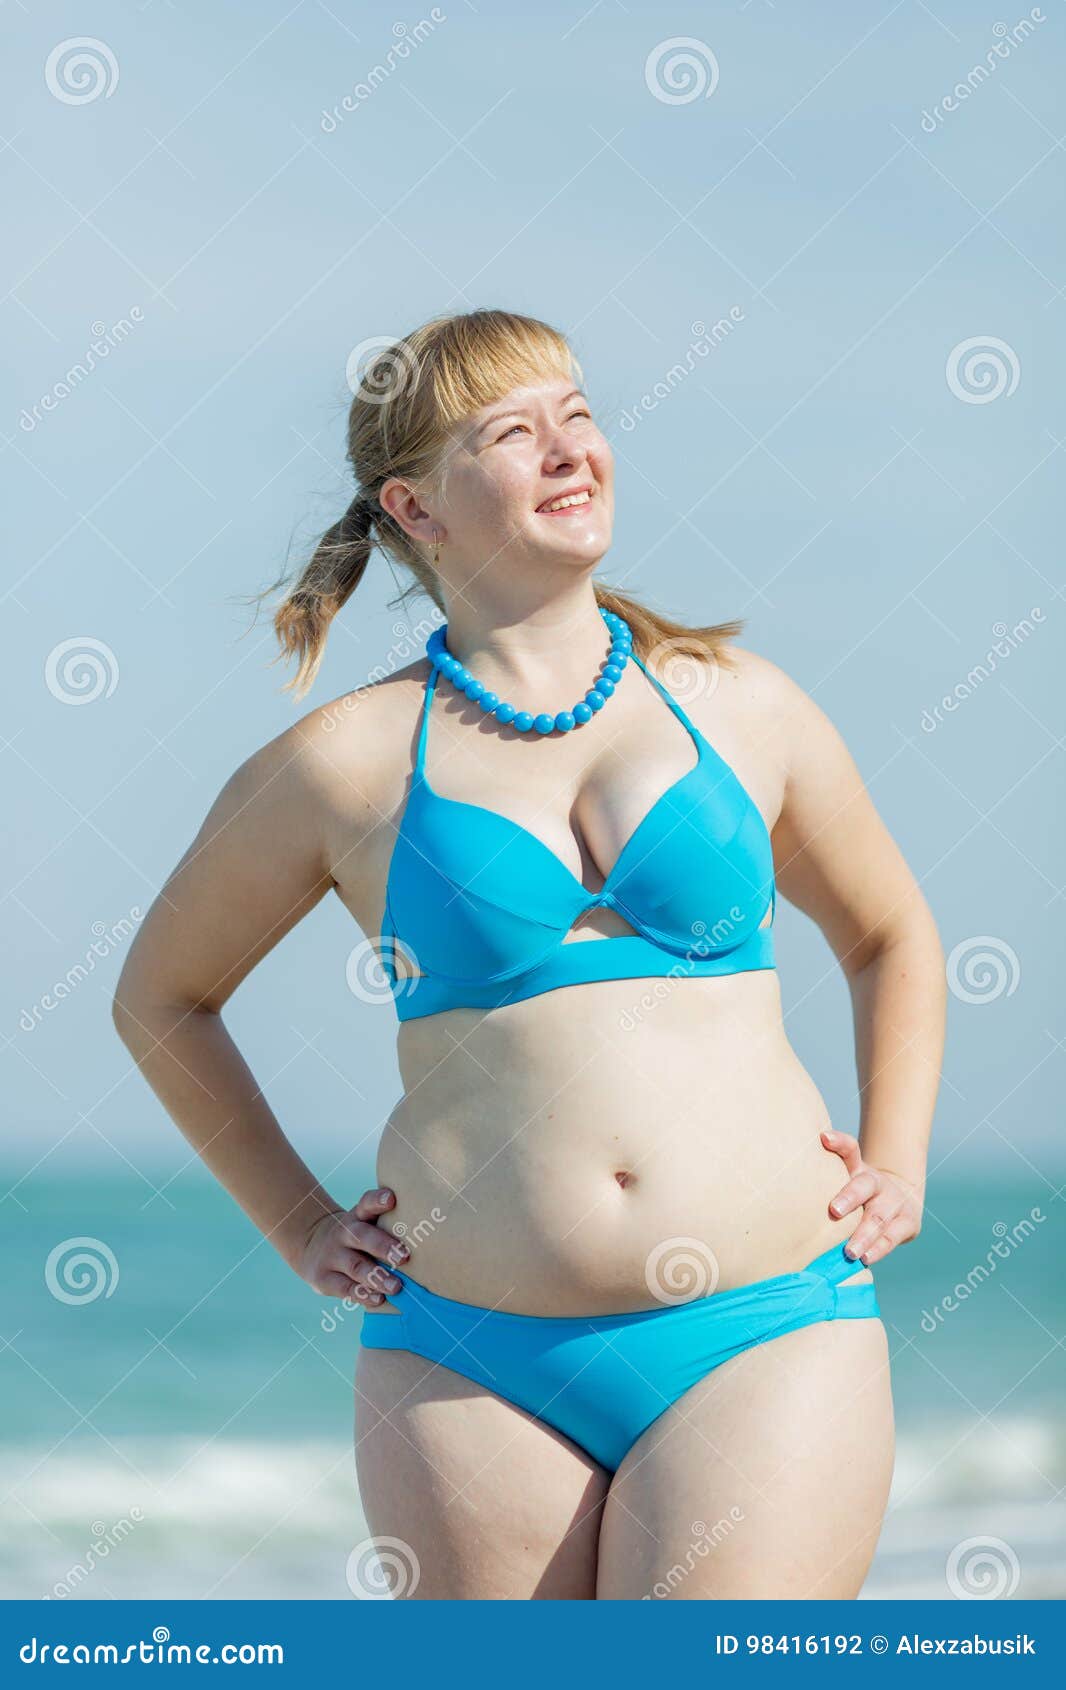 801 Middle Aged Woman Bikini Stock Photos